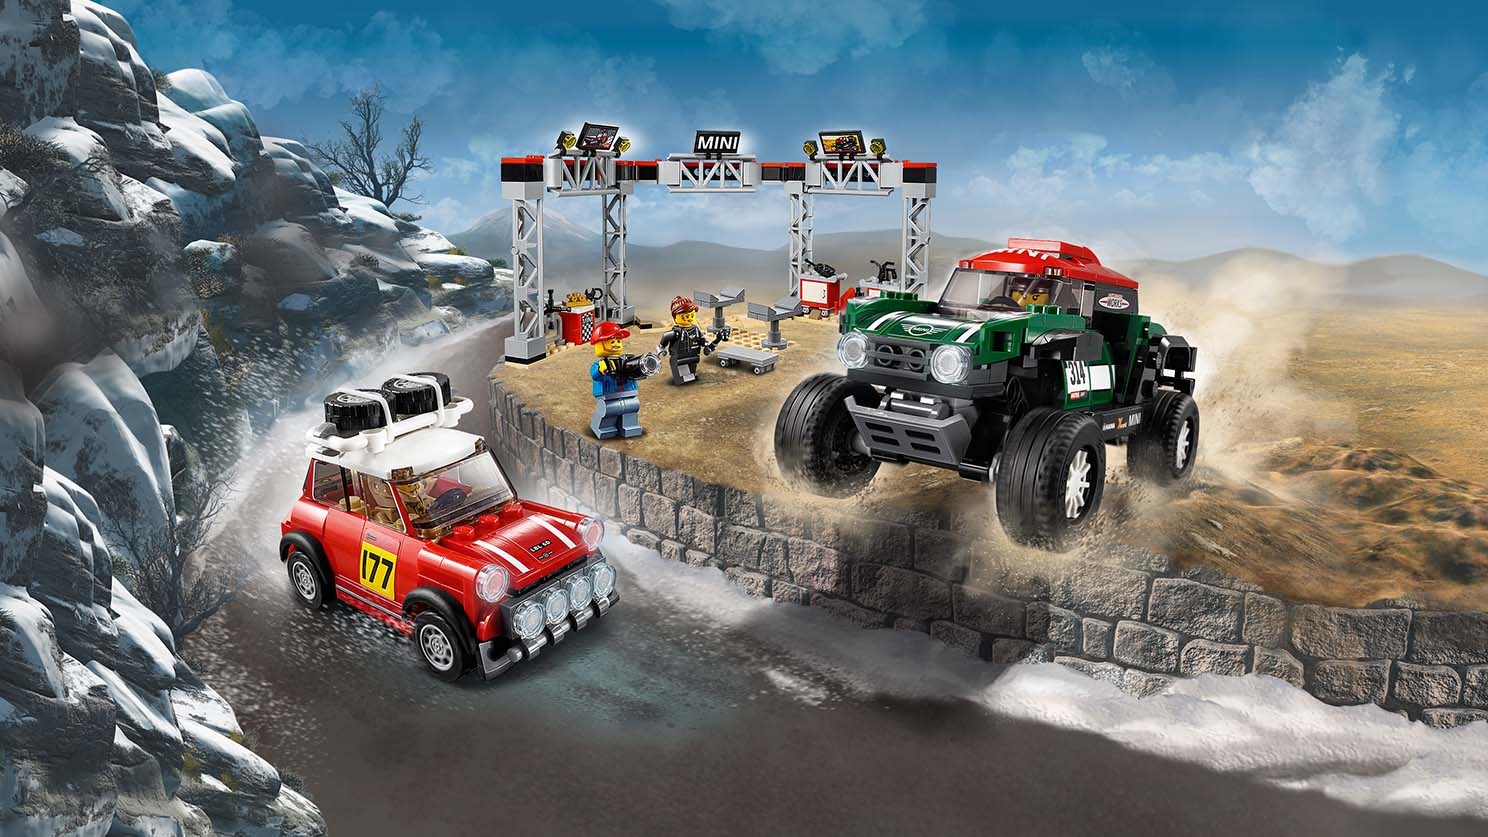 Ekspression vejr Manchuriet 1967 Mini Cooper S Rally and 2018 MINI John Cooper Works Buggy 75894 - LEGO®  Speed Champions Sets - LEGO.com for kids